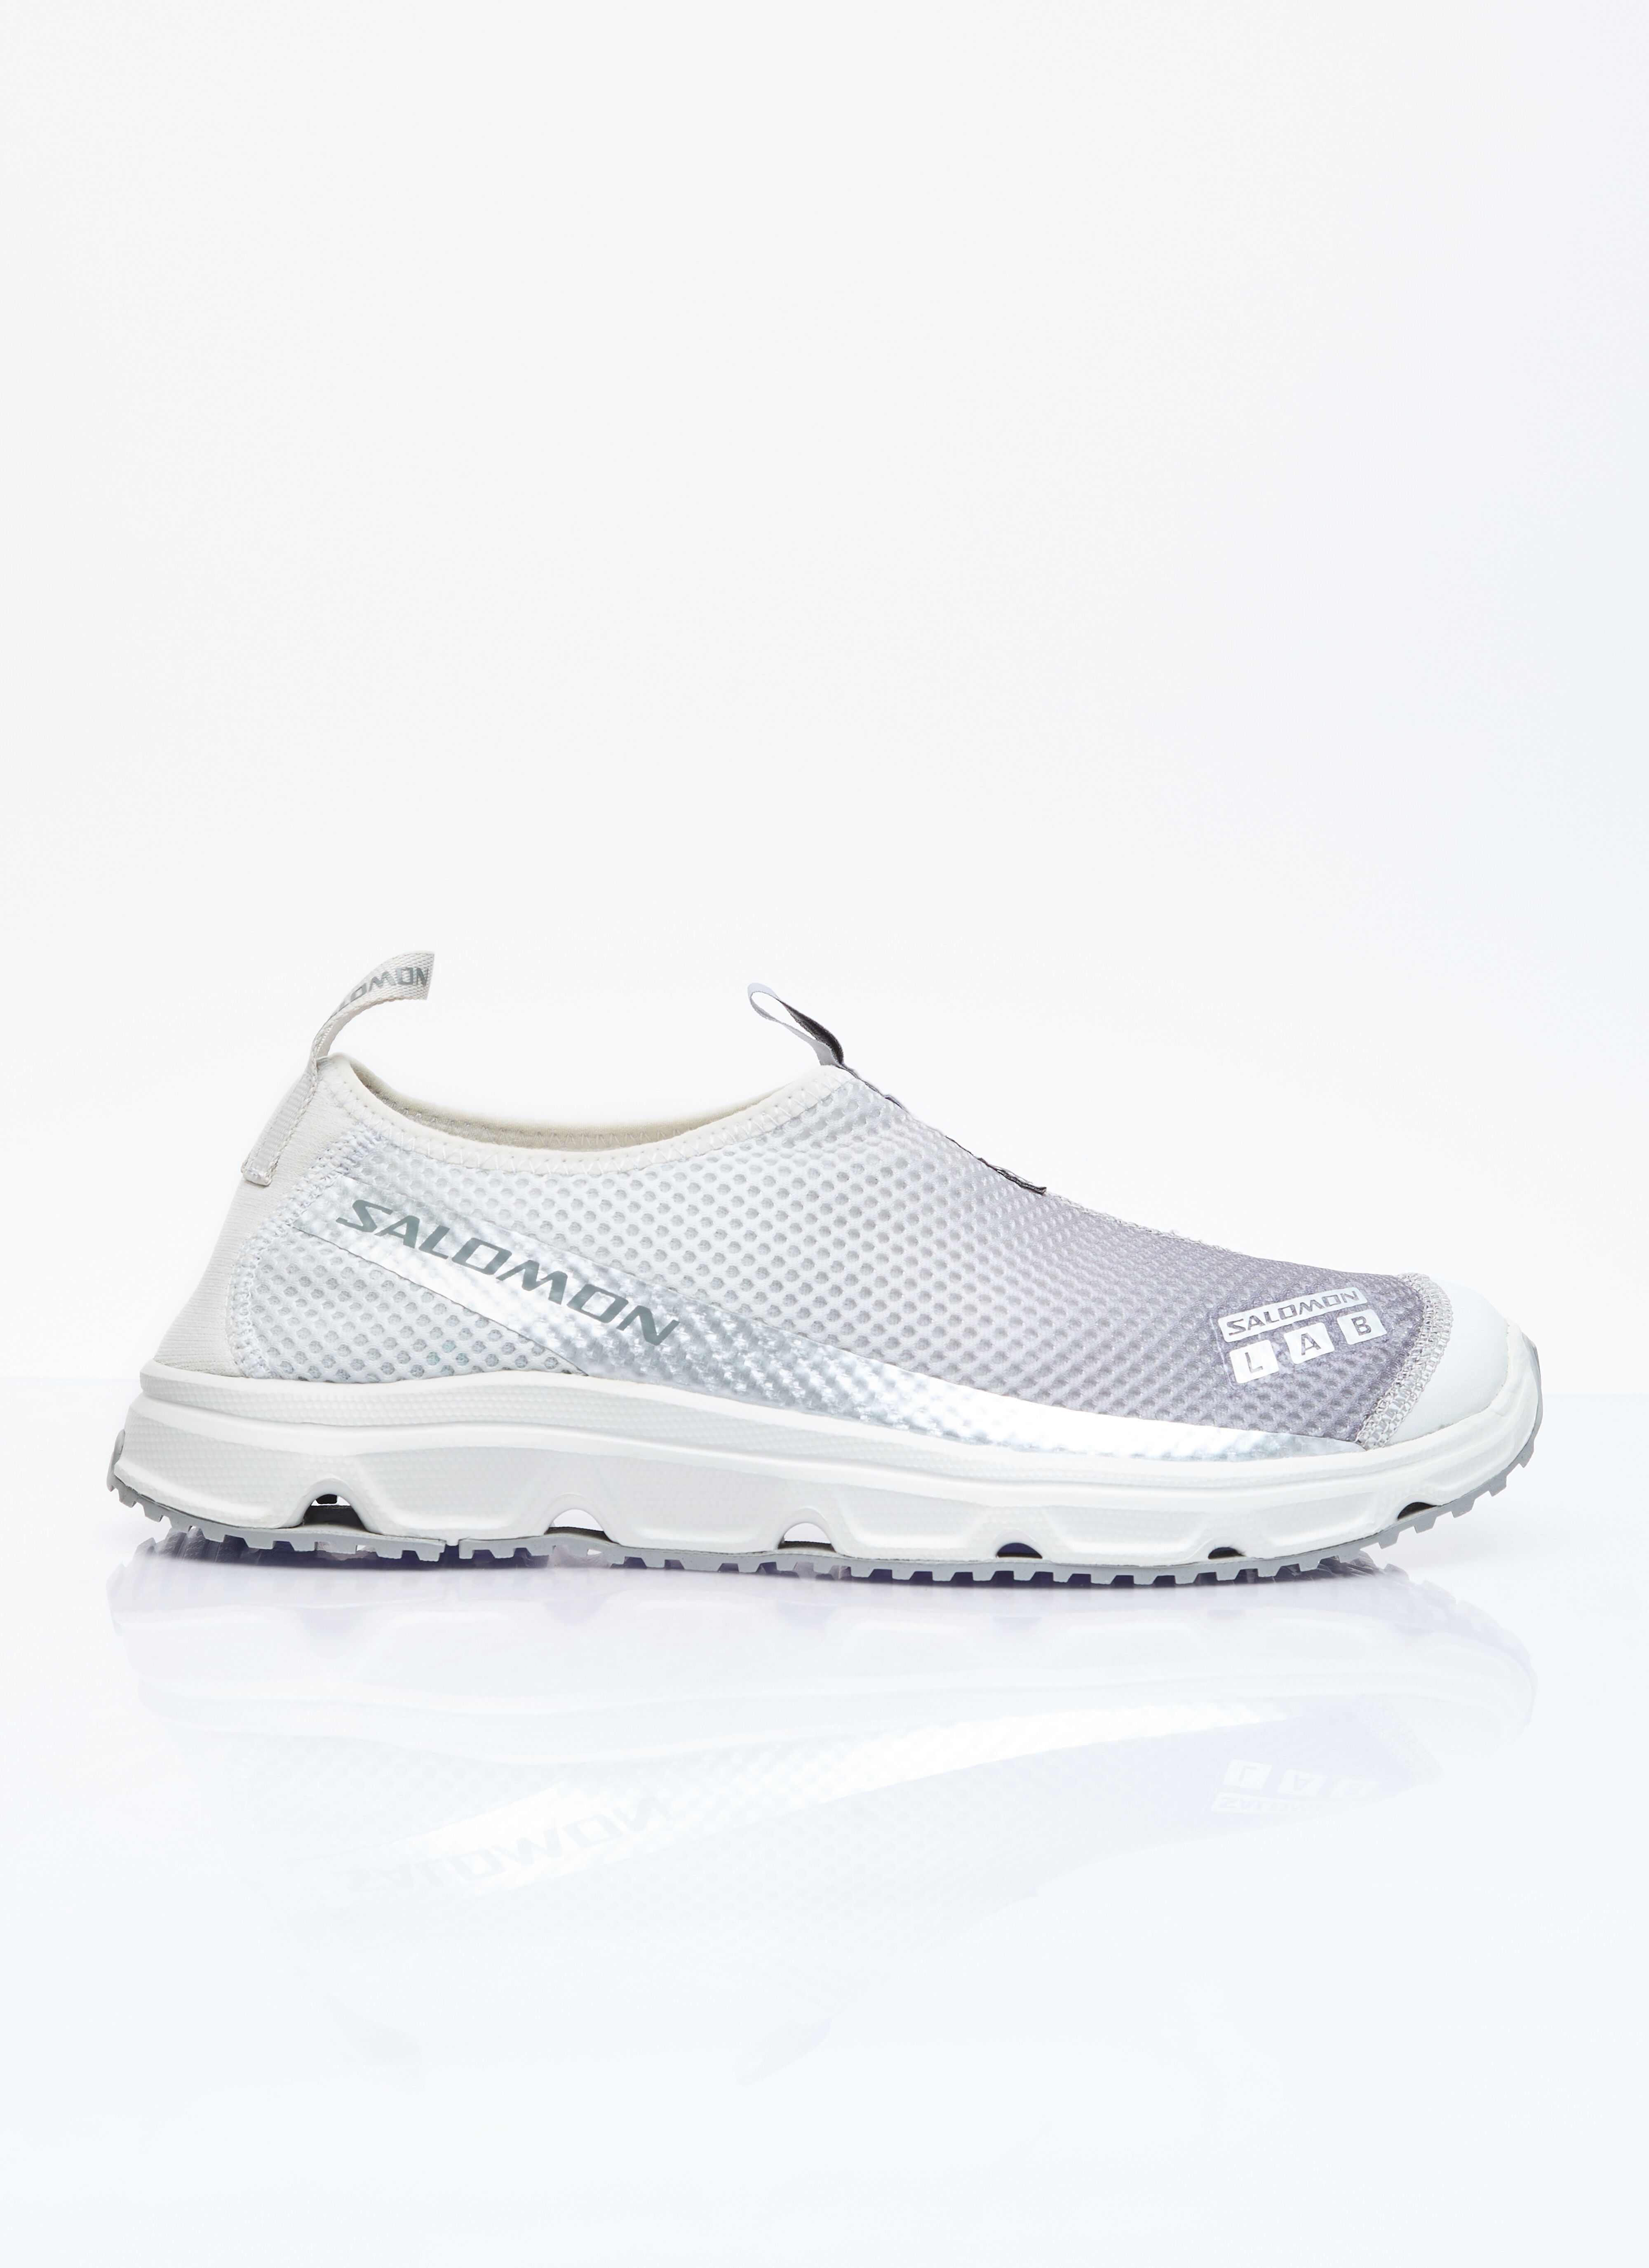 MM6 Maison Margiela RX Moc 3.0 Sneakers White mmm0155017